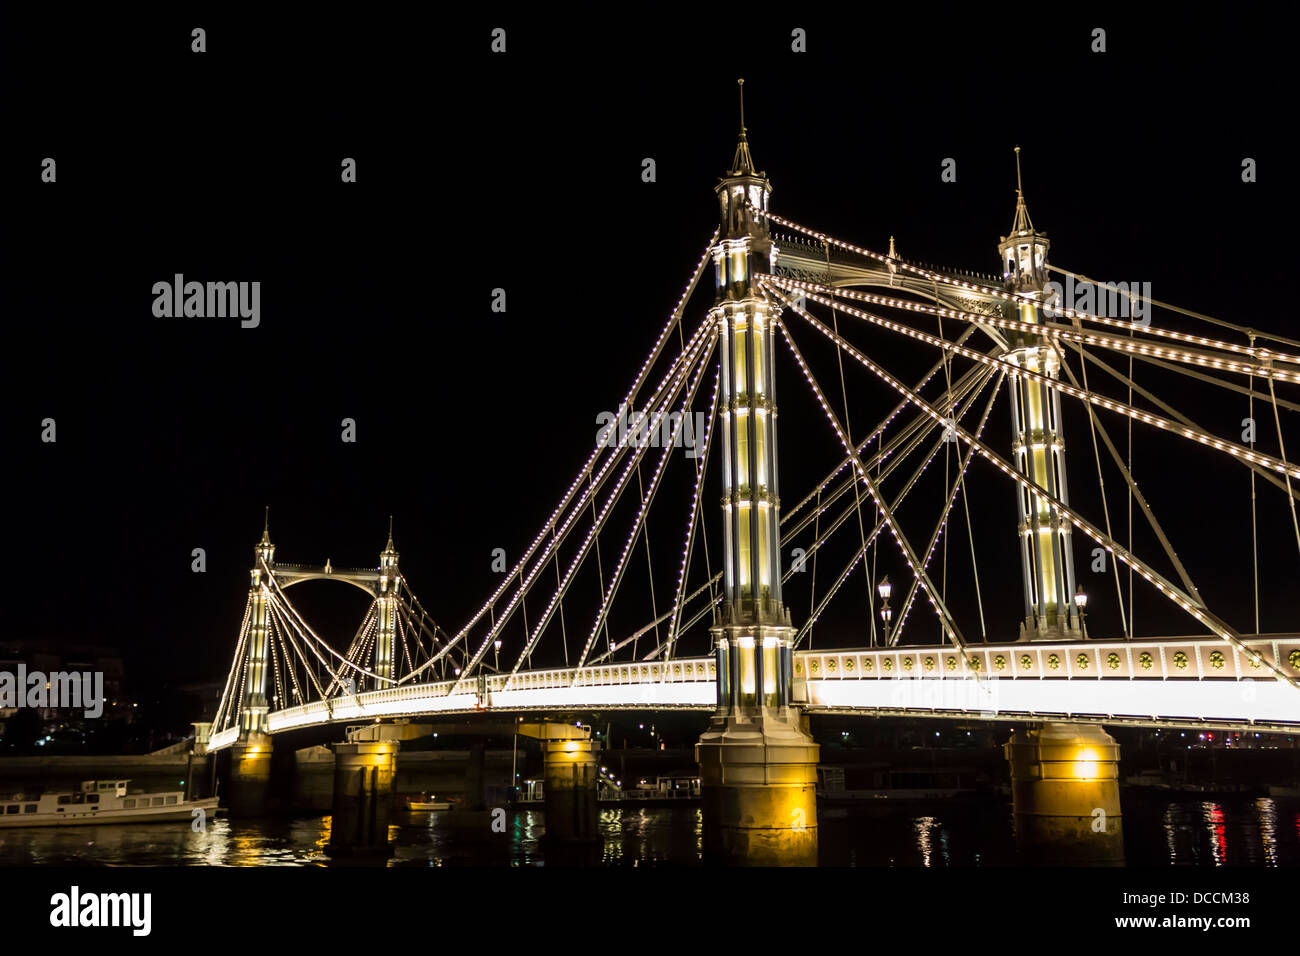 Albert Bridge at Night, London, UK Illuminated by LED Lights Stock Photo